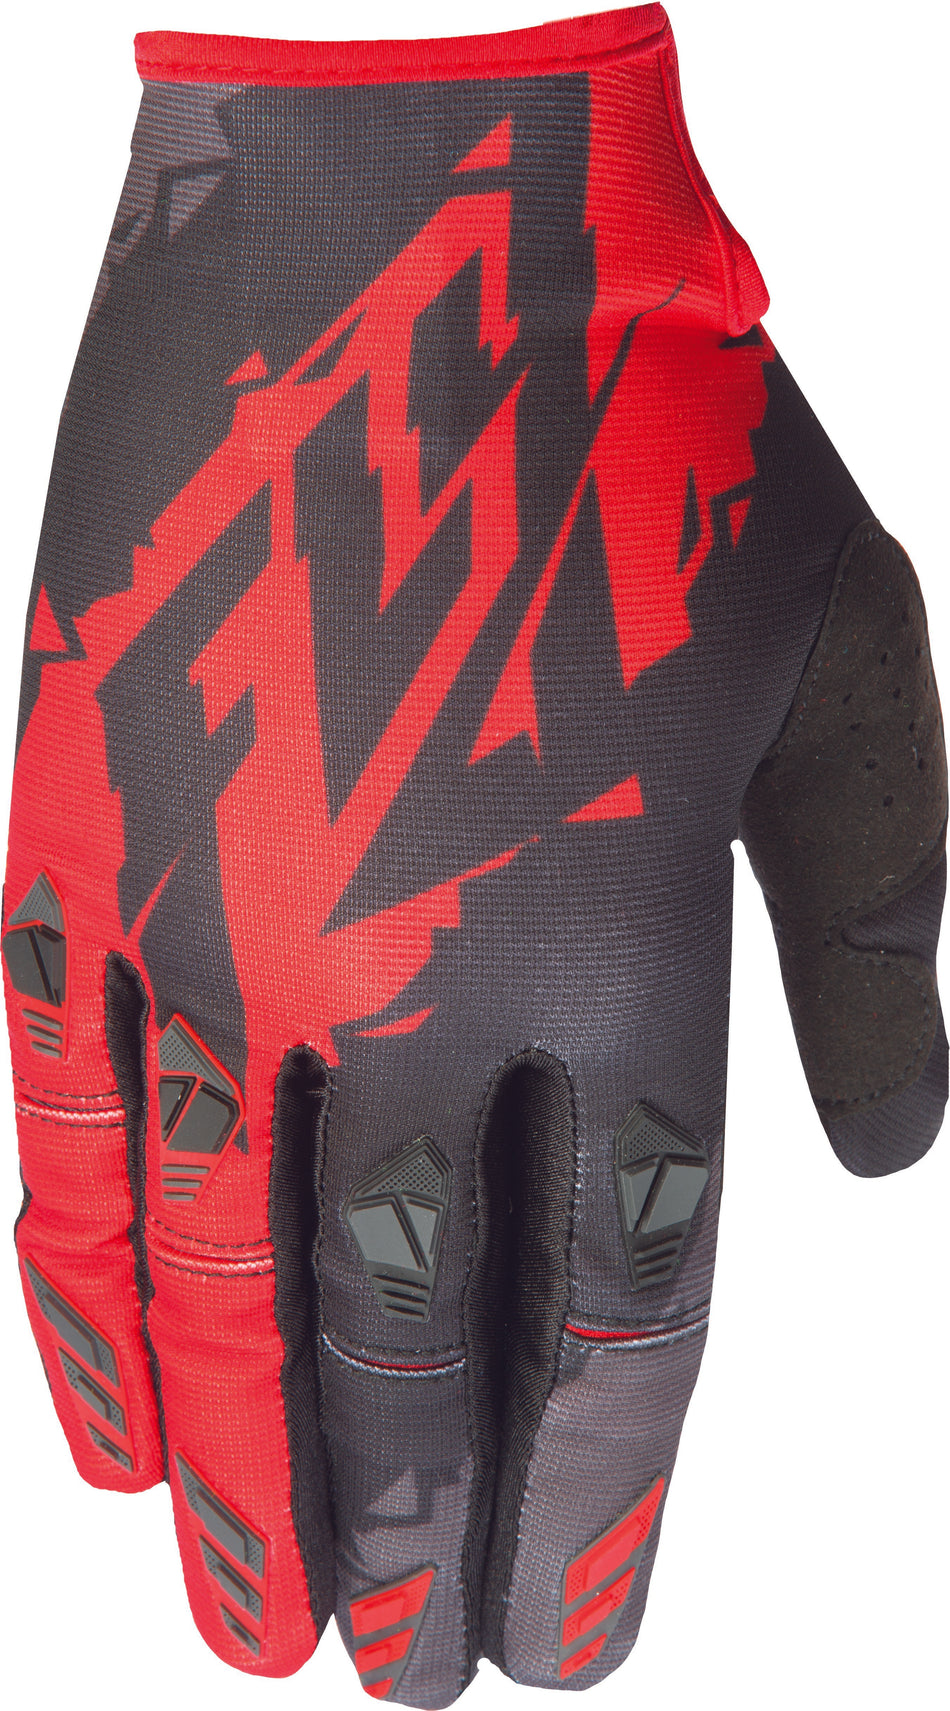 FLY RACING Kinetic Glove Black/Red Sz 6 Yl 370-41206